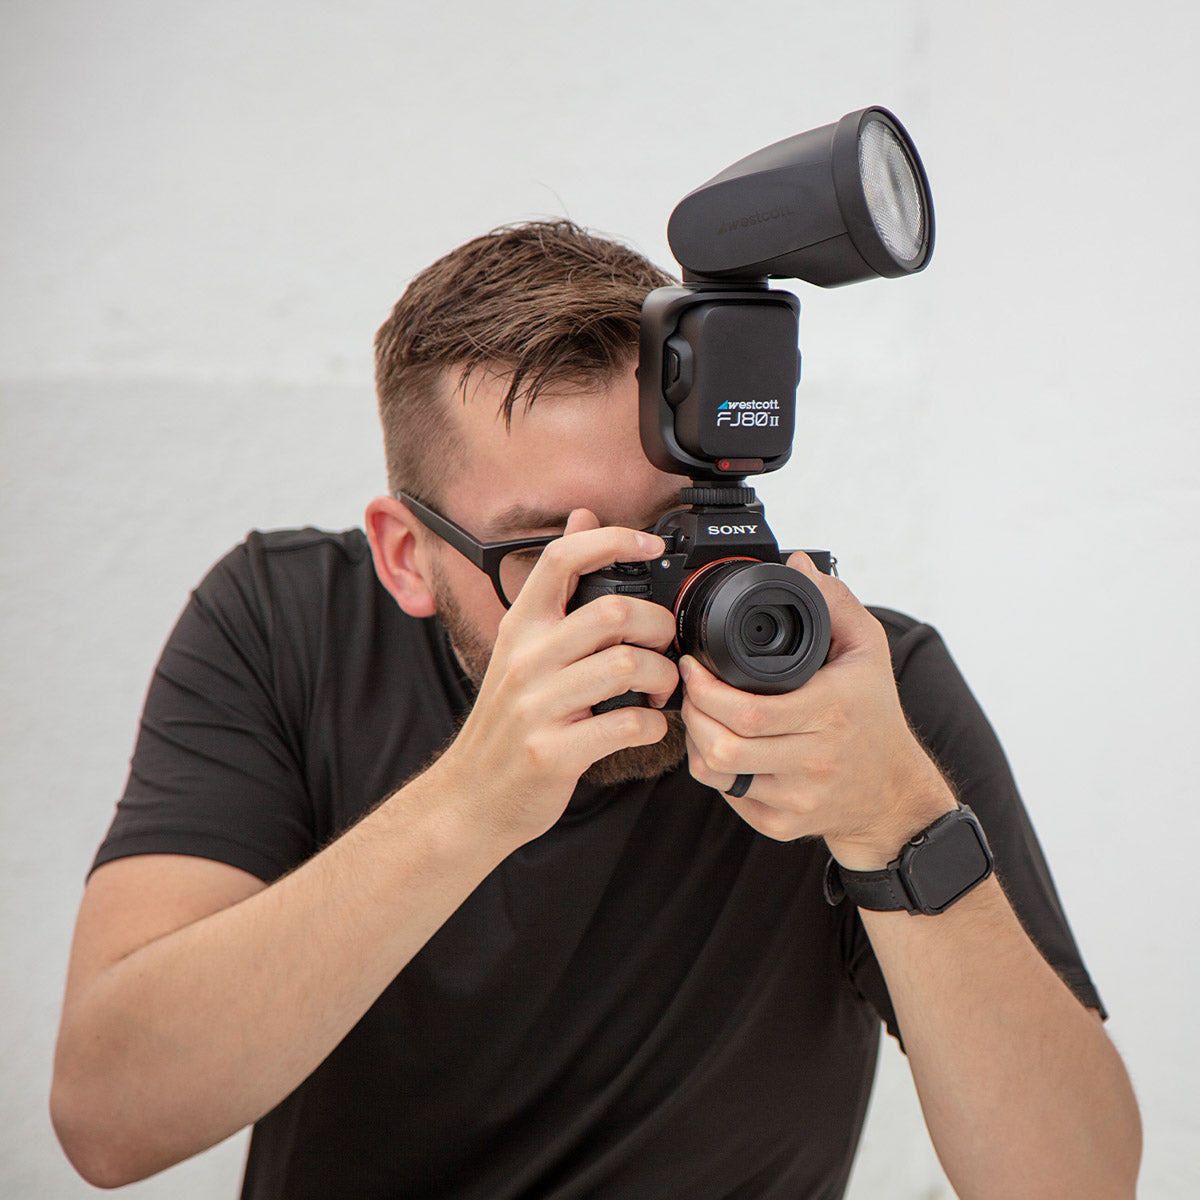 A cameraman using the Westcott FJ80 II on a Sony Camera